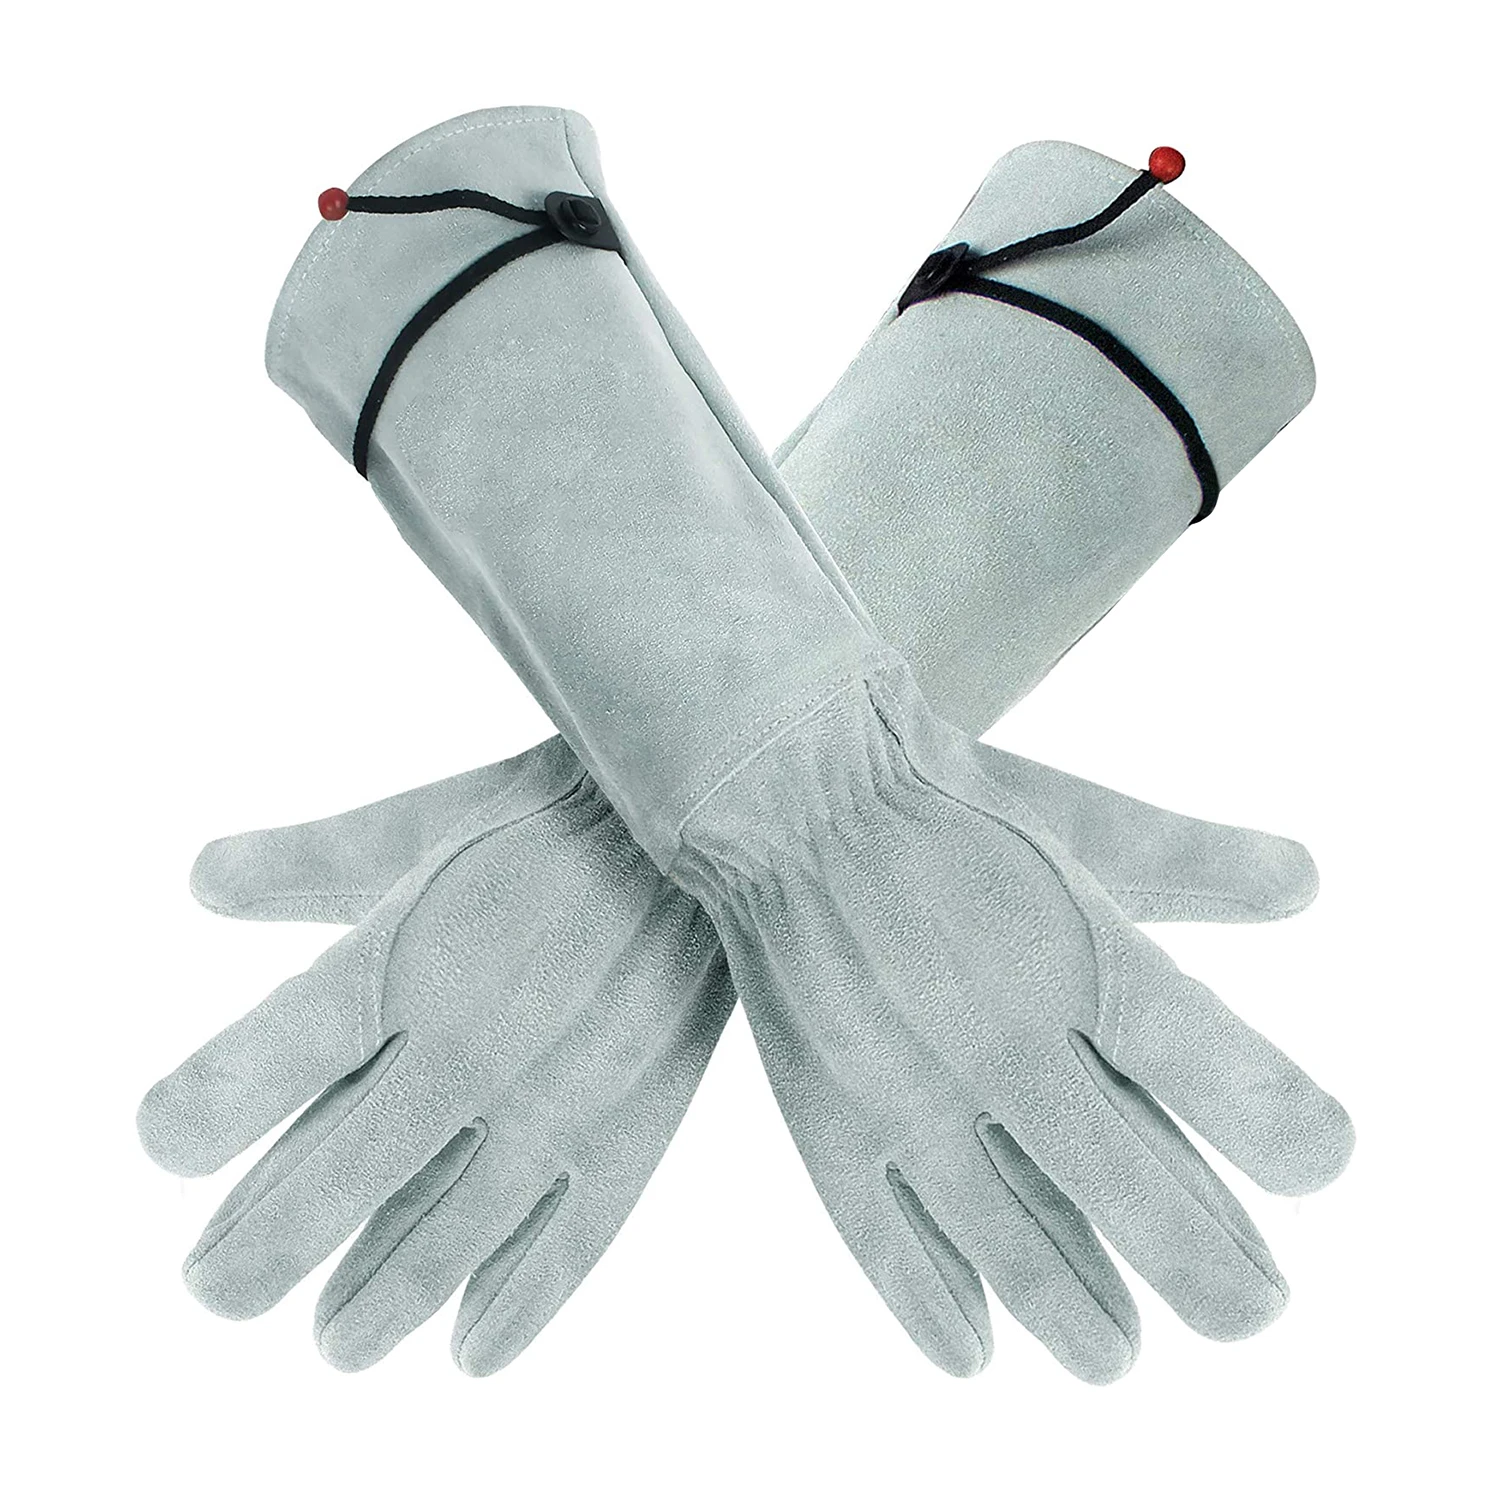 Cow Split Leather Thick Gardener Safety Gloves oem Logo Rostaing Garden Glove for Amazon Aliexpress Ebay Retailer